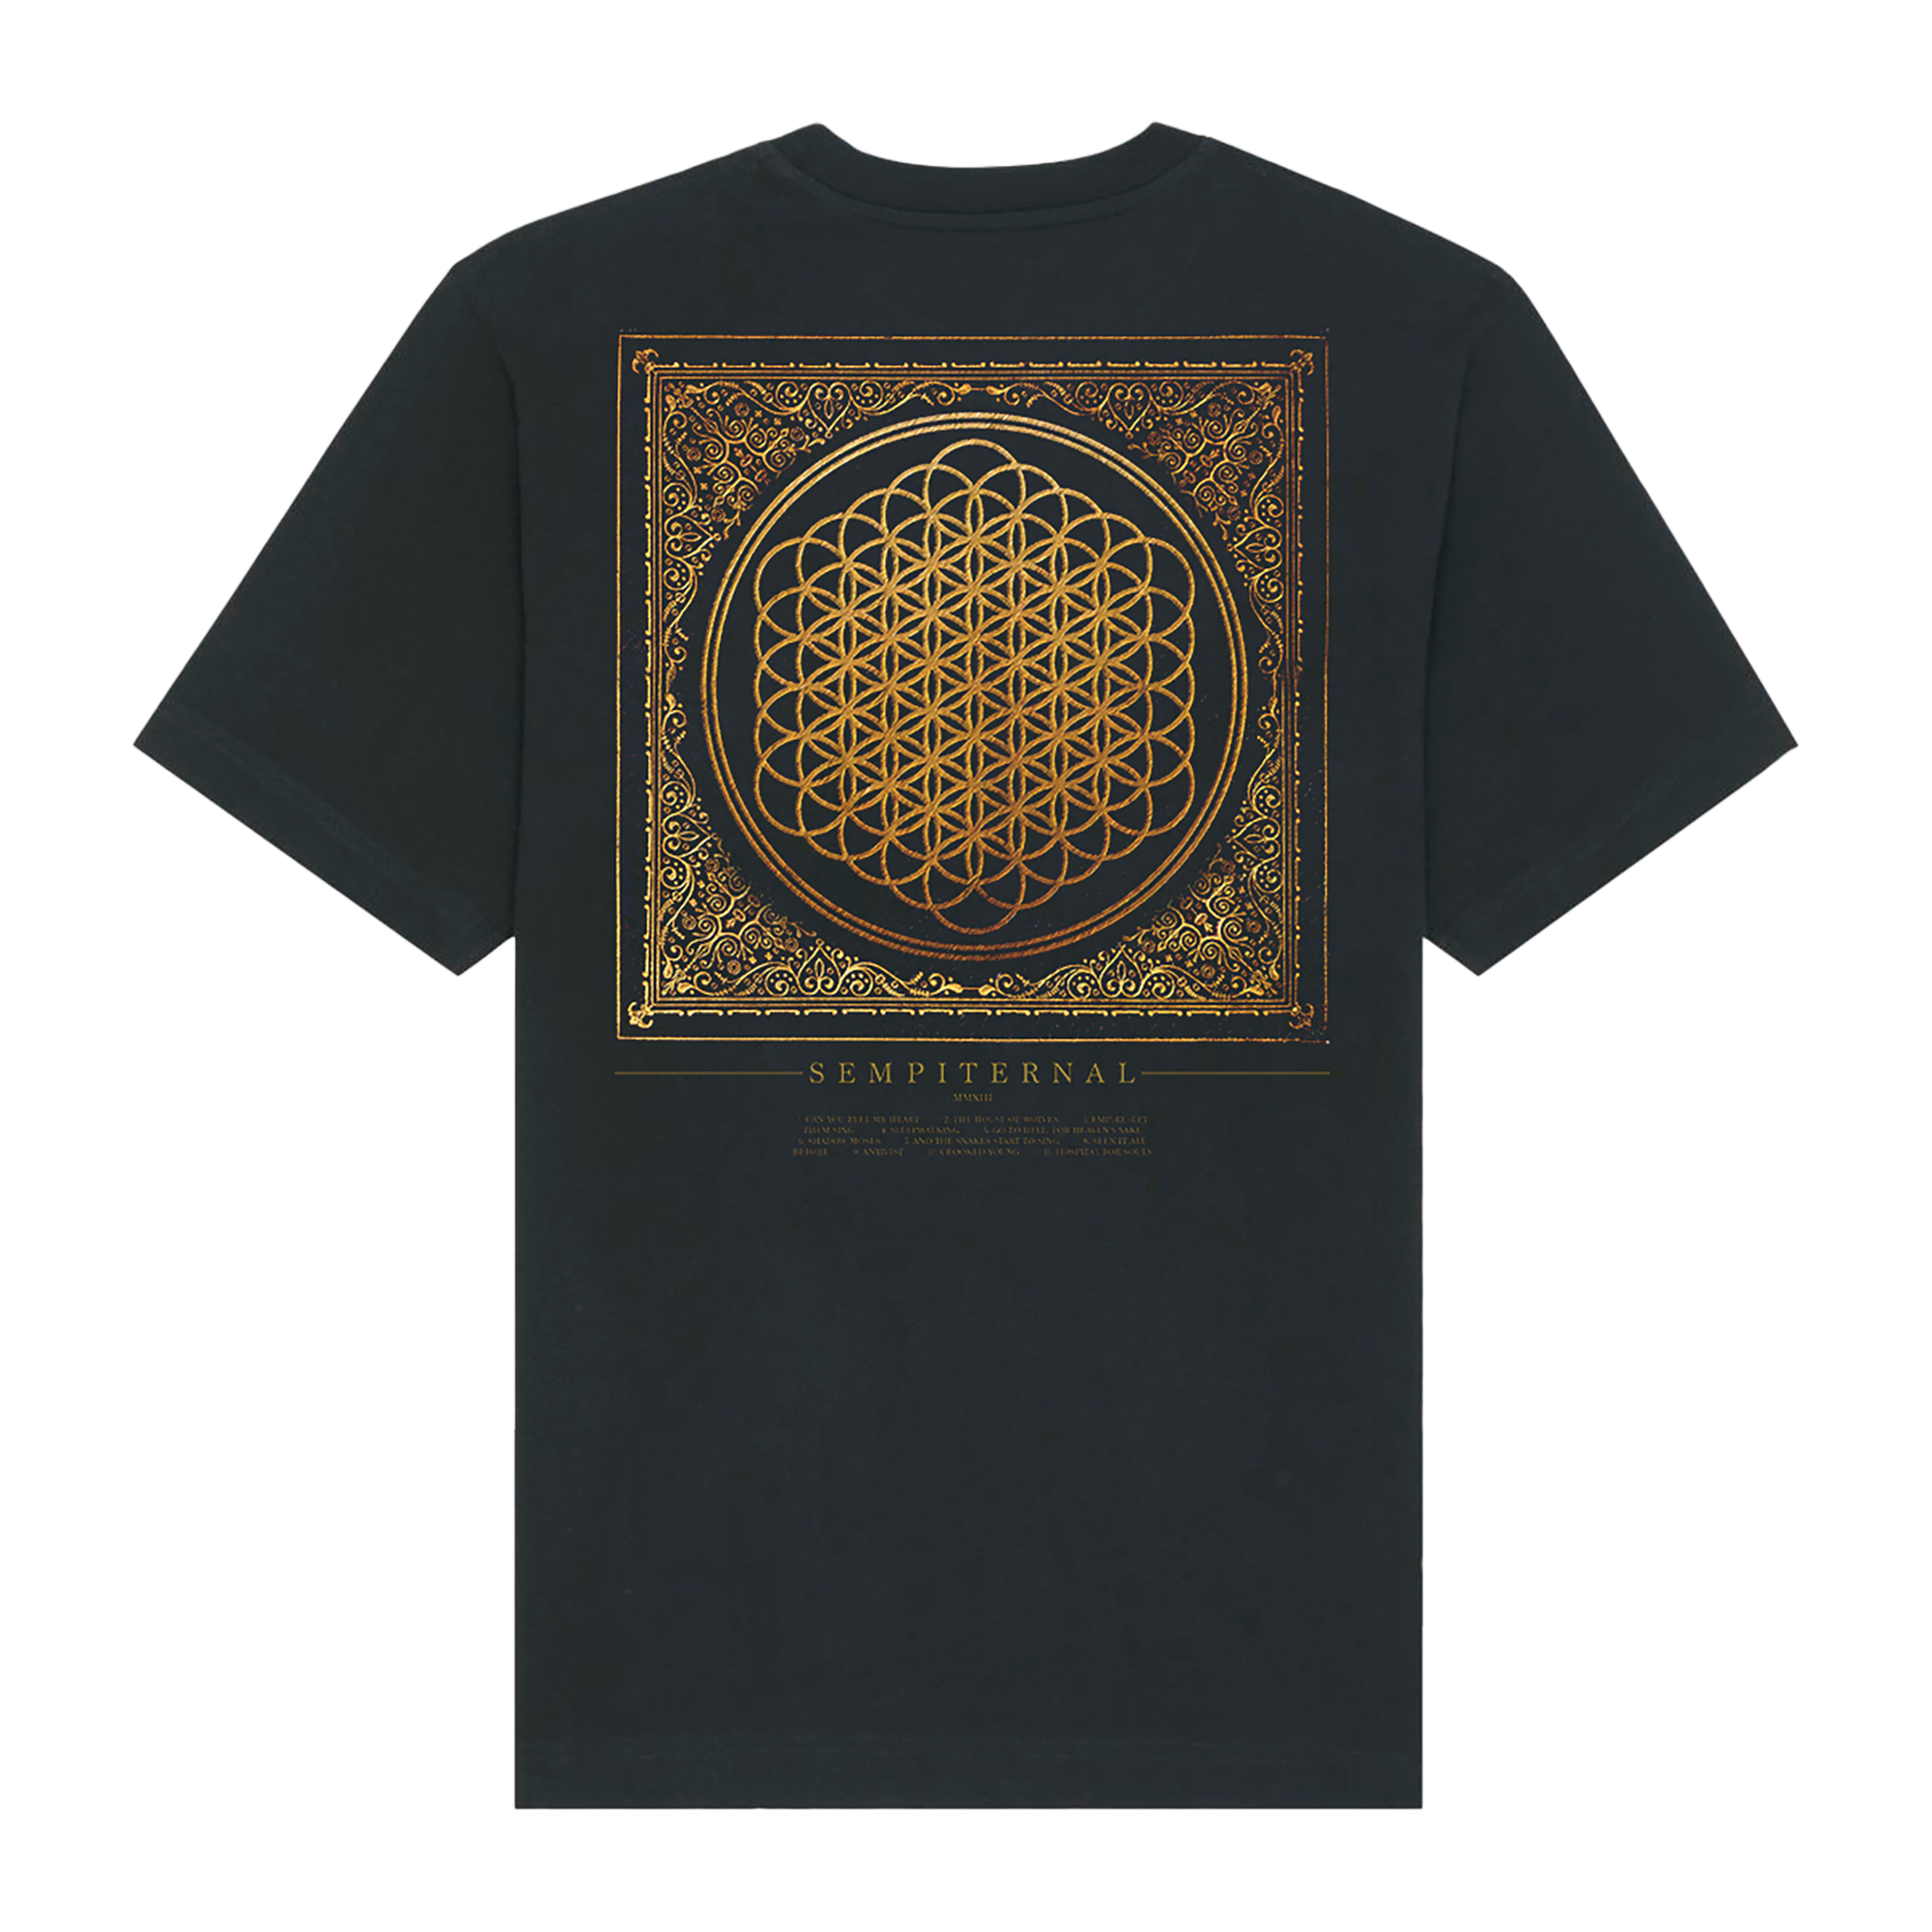 Sempiternal (10th Anniversary Edition) Black T-Shirt